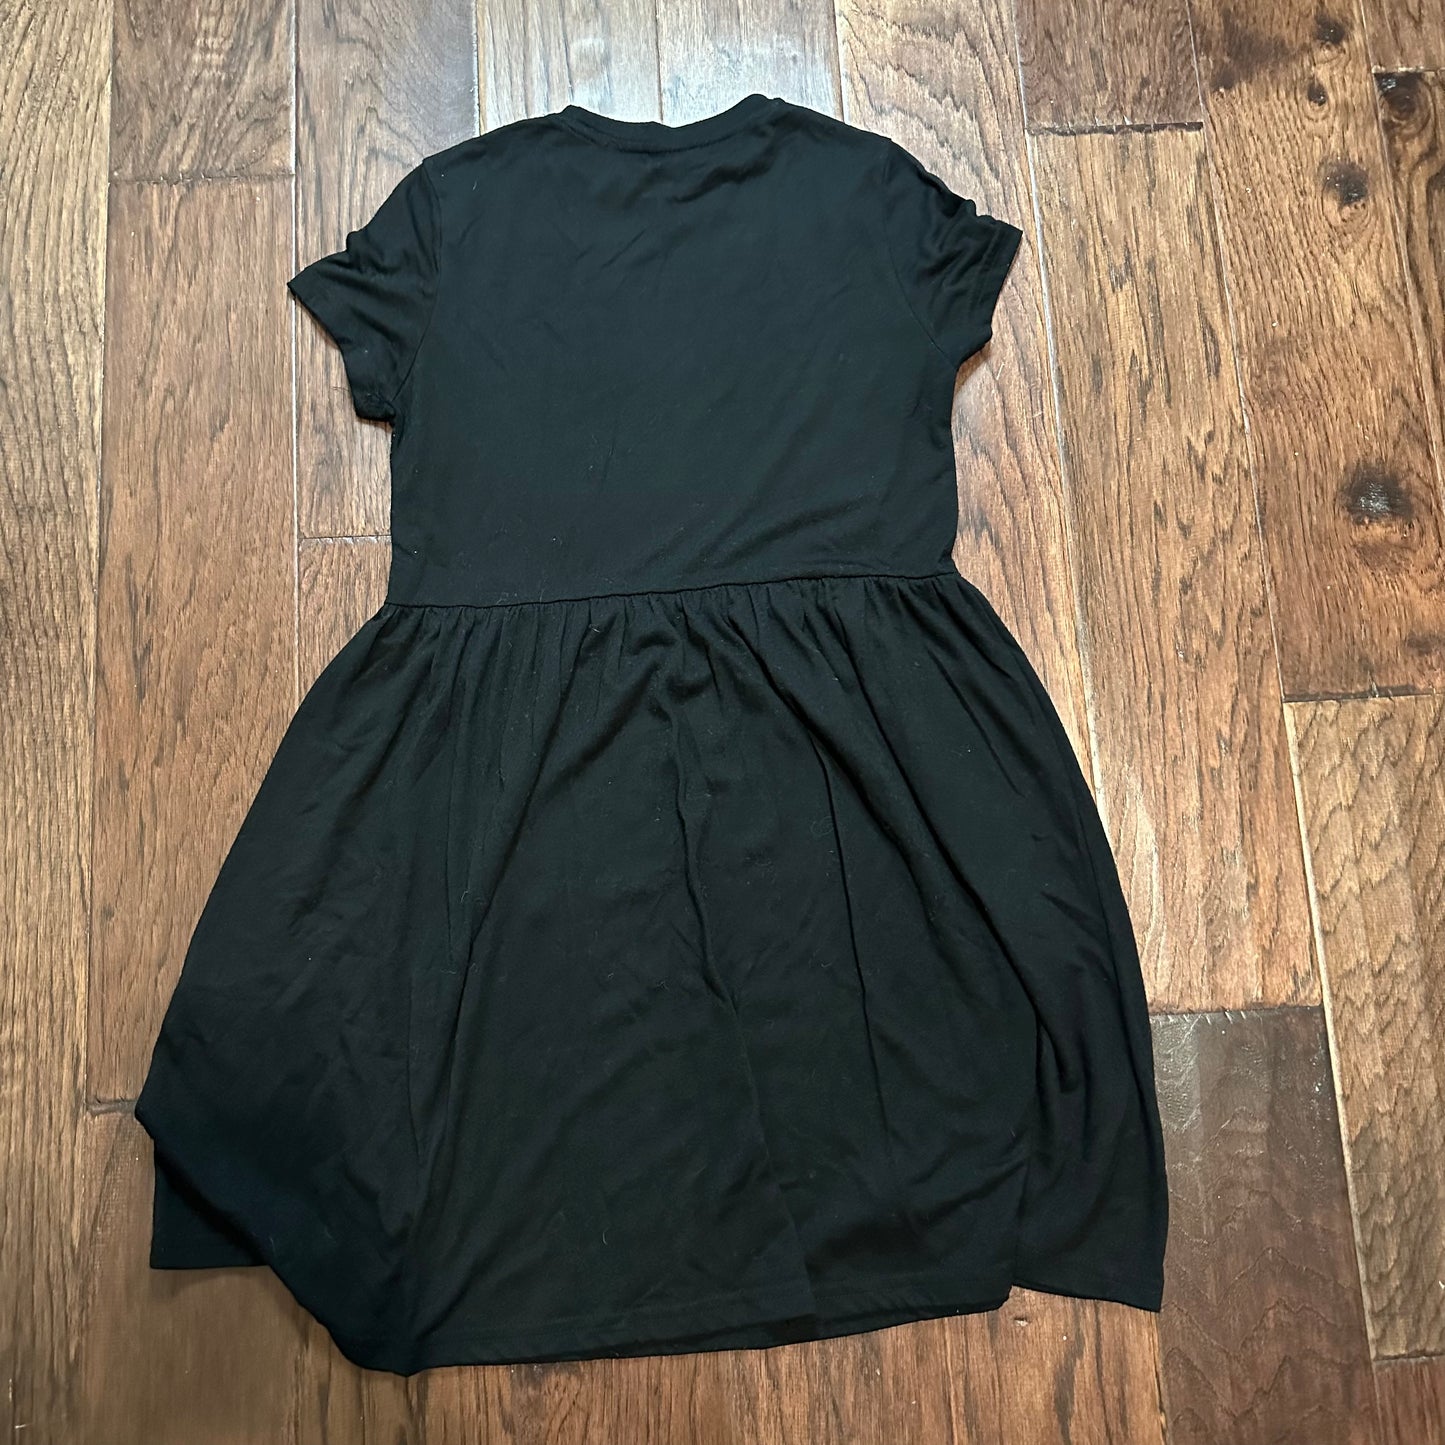 SHEIN Black Dress - Small